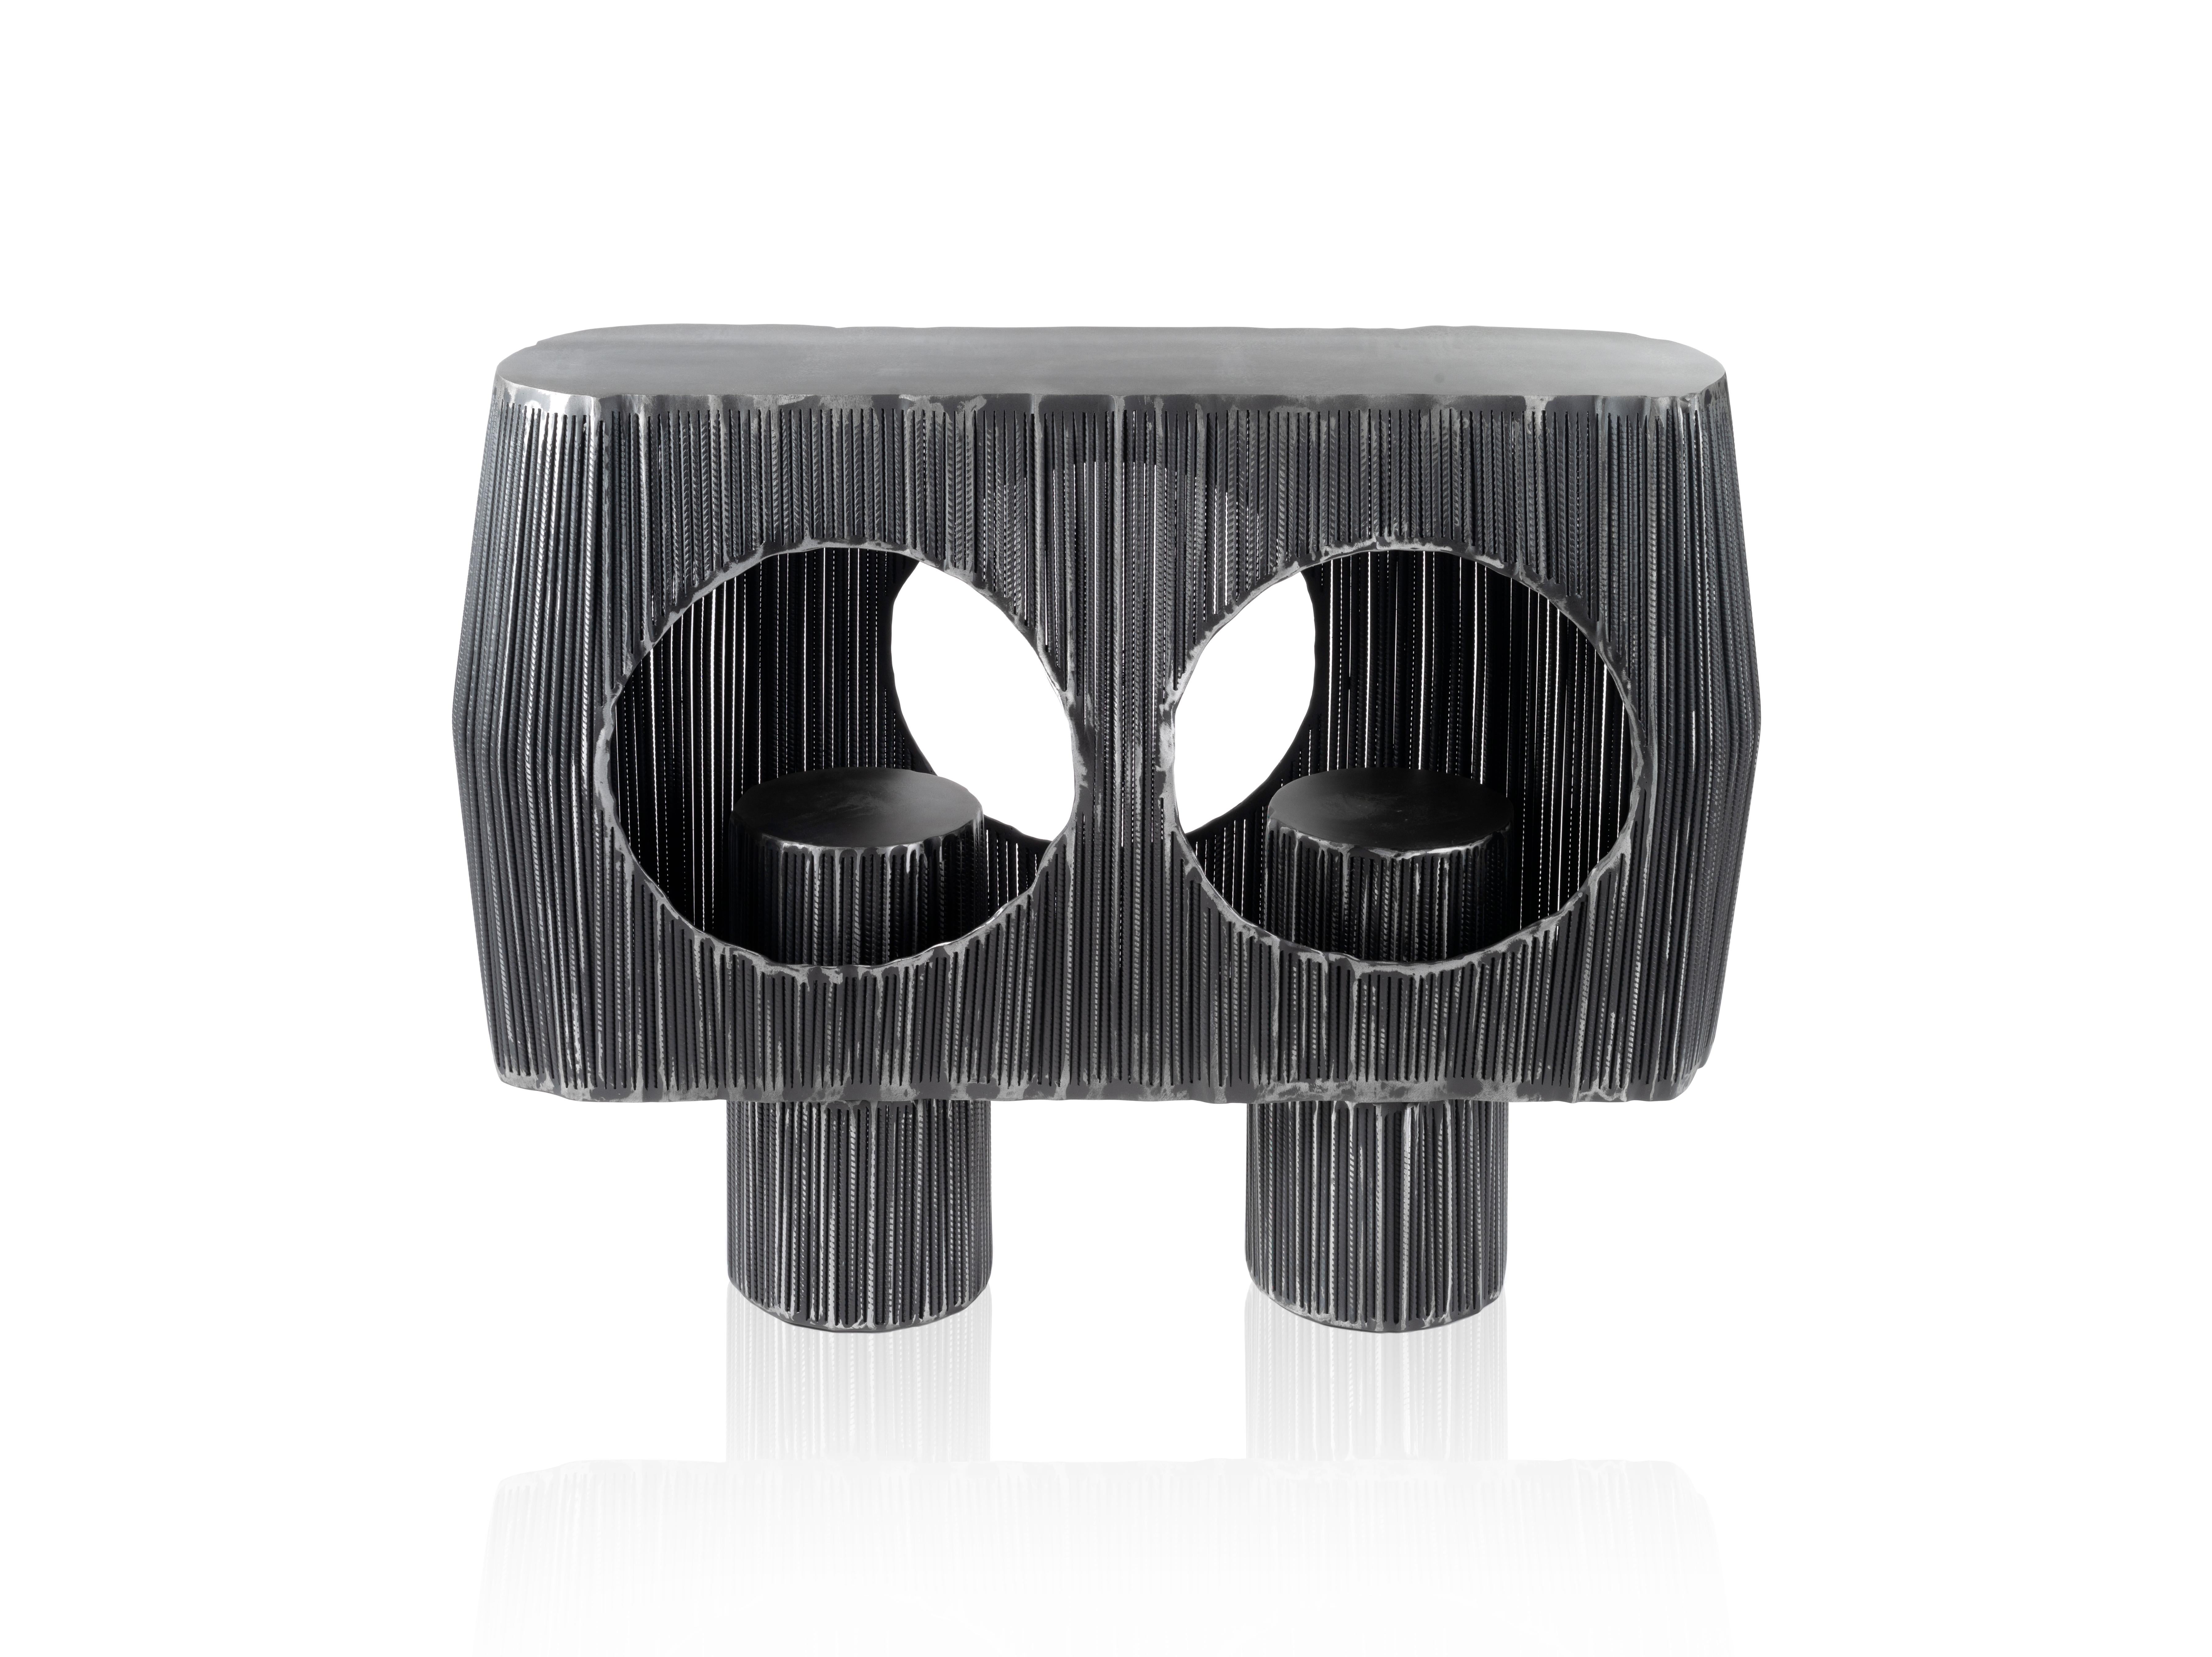 Dutch Rebar Steel Cabinet by Jordan Artisan Collectible Design Credenza Round Display For Sale